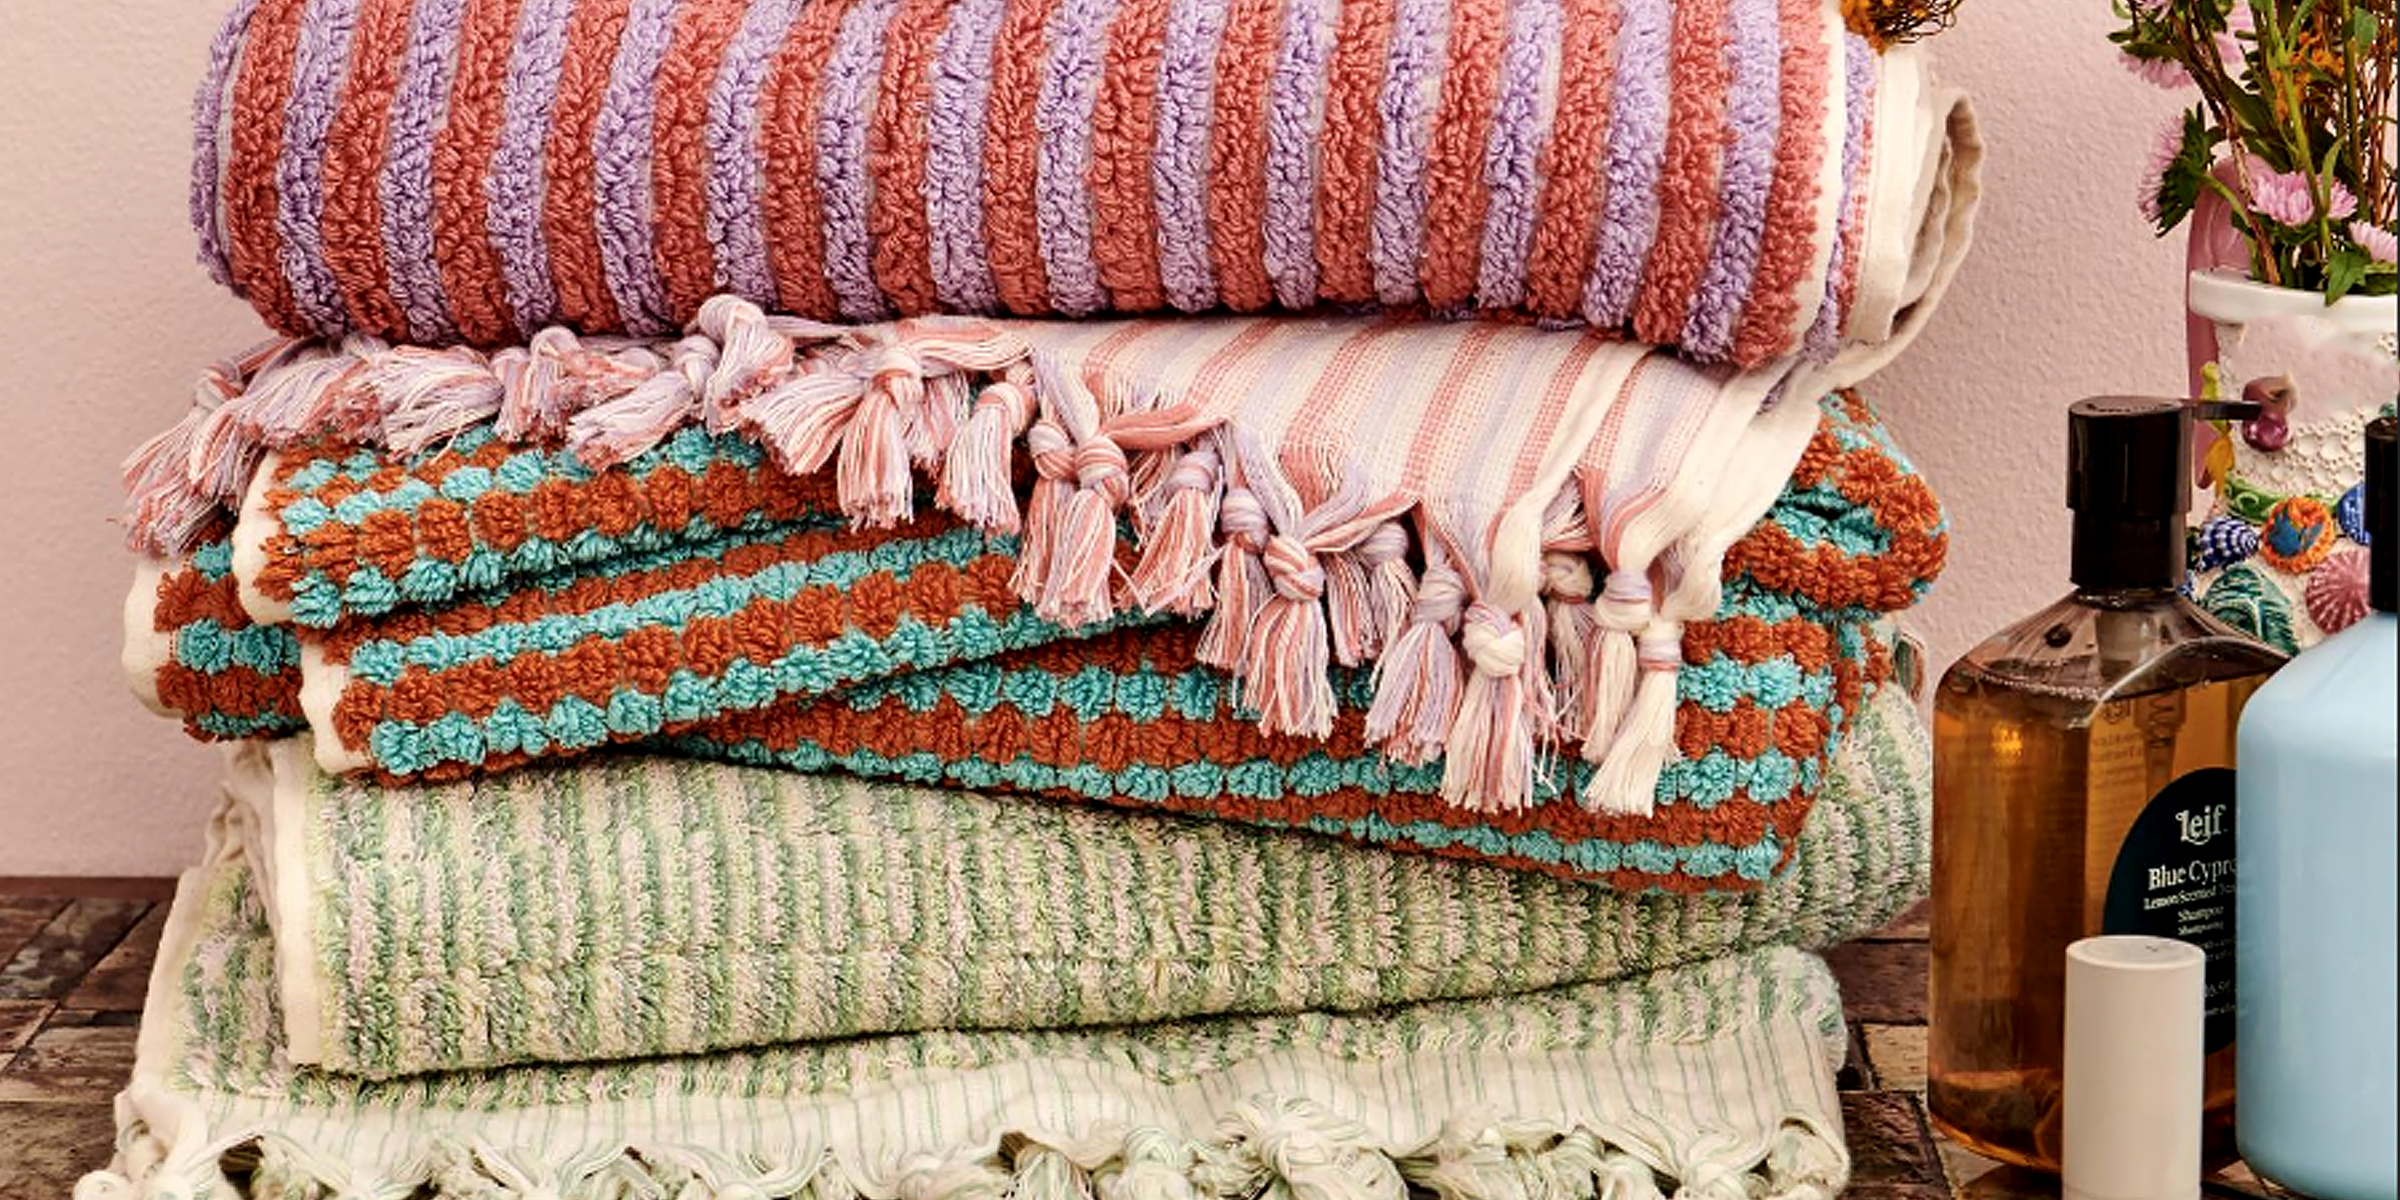 Turkish towels | Source: Instagram/kipandco